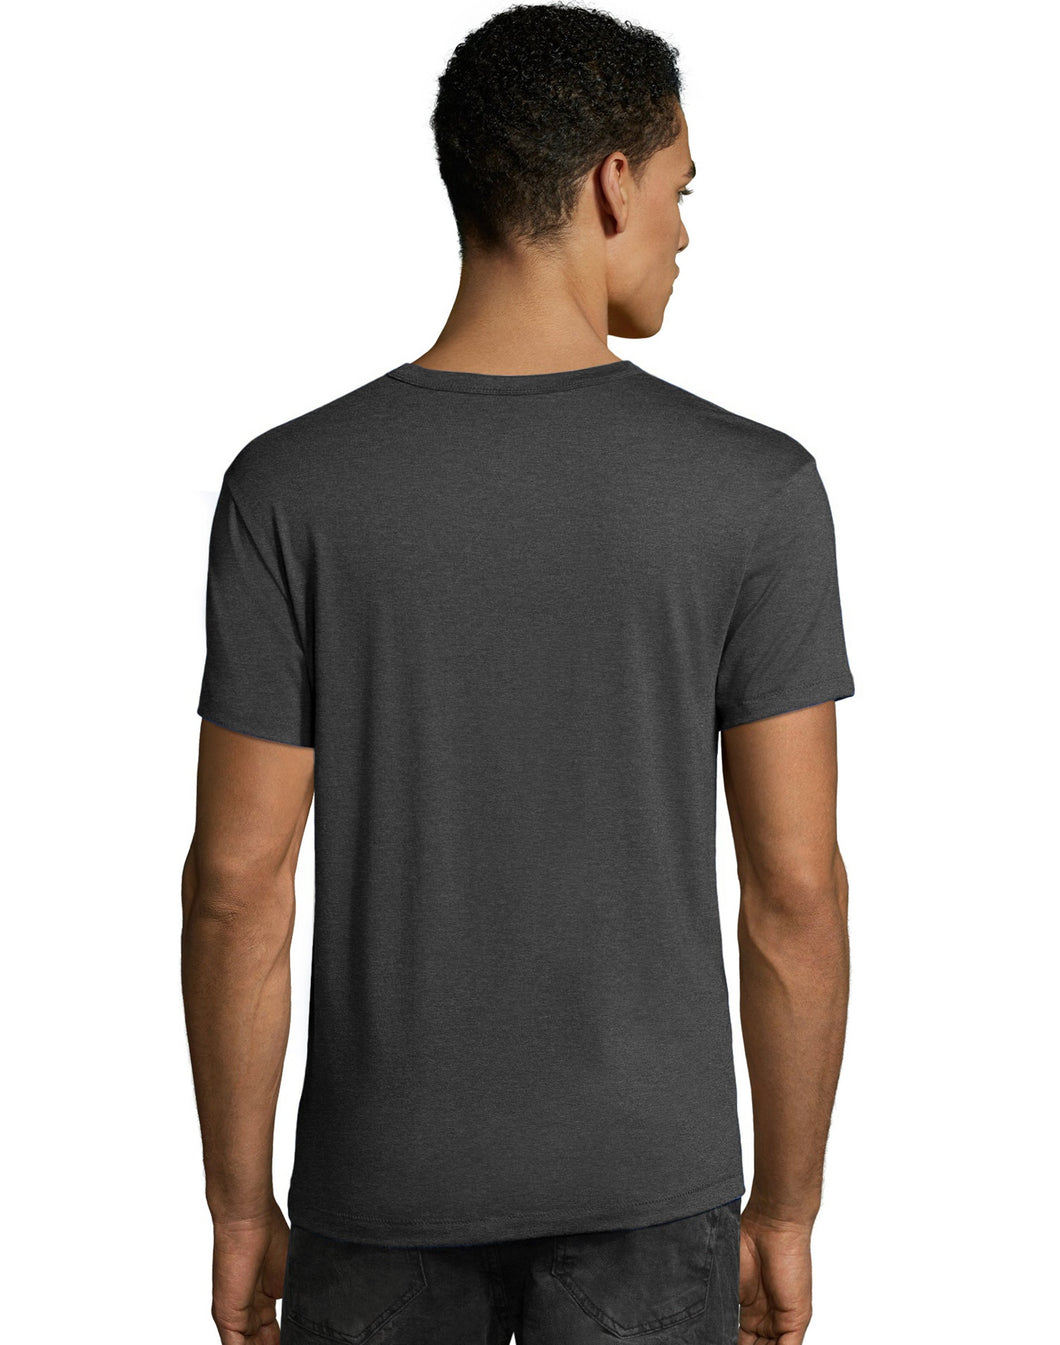 Feat Men's NASA Shirt, New Meatball Logo Insignia Symbol Graphic T-Shirt